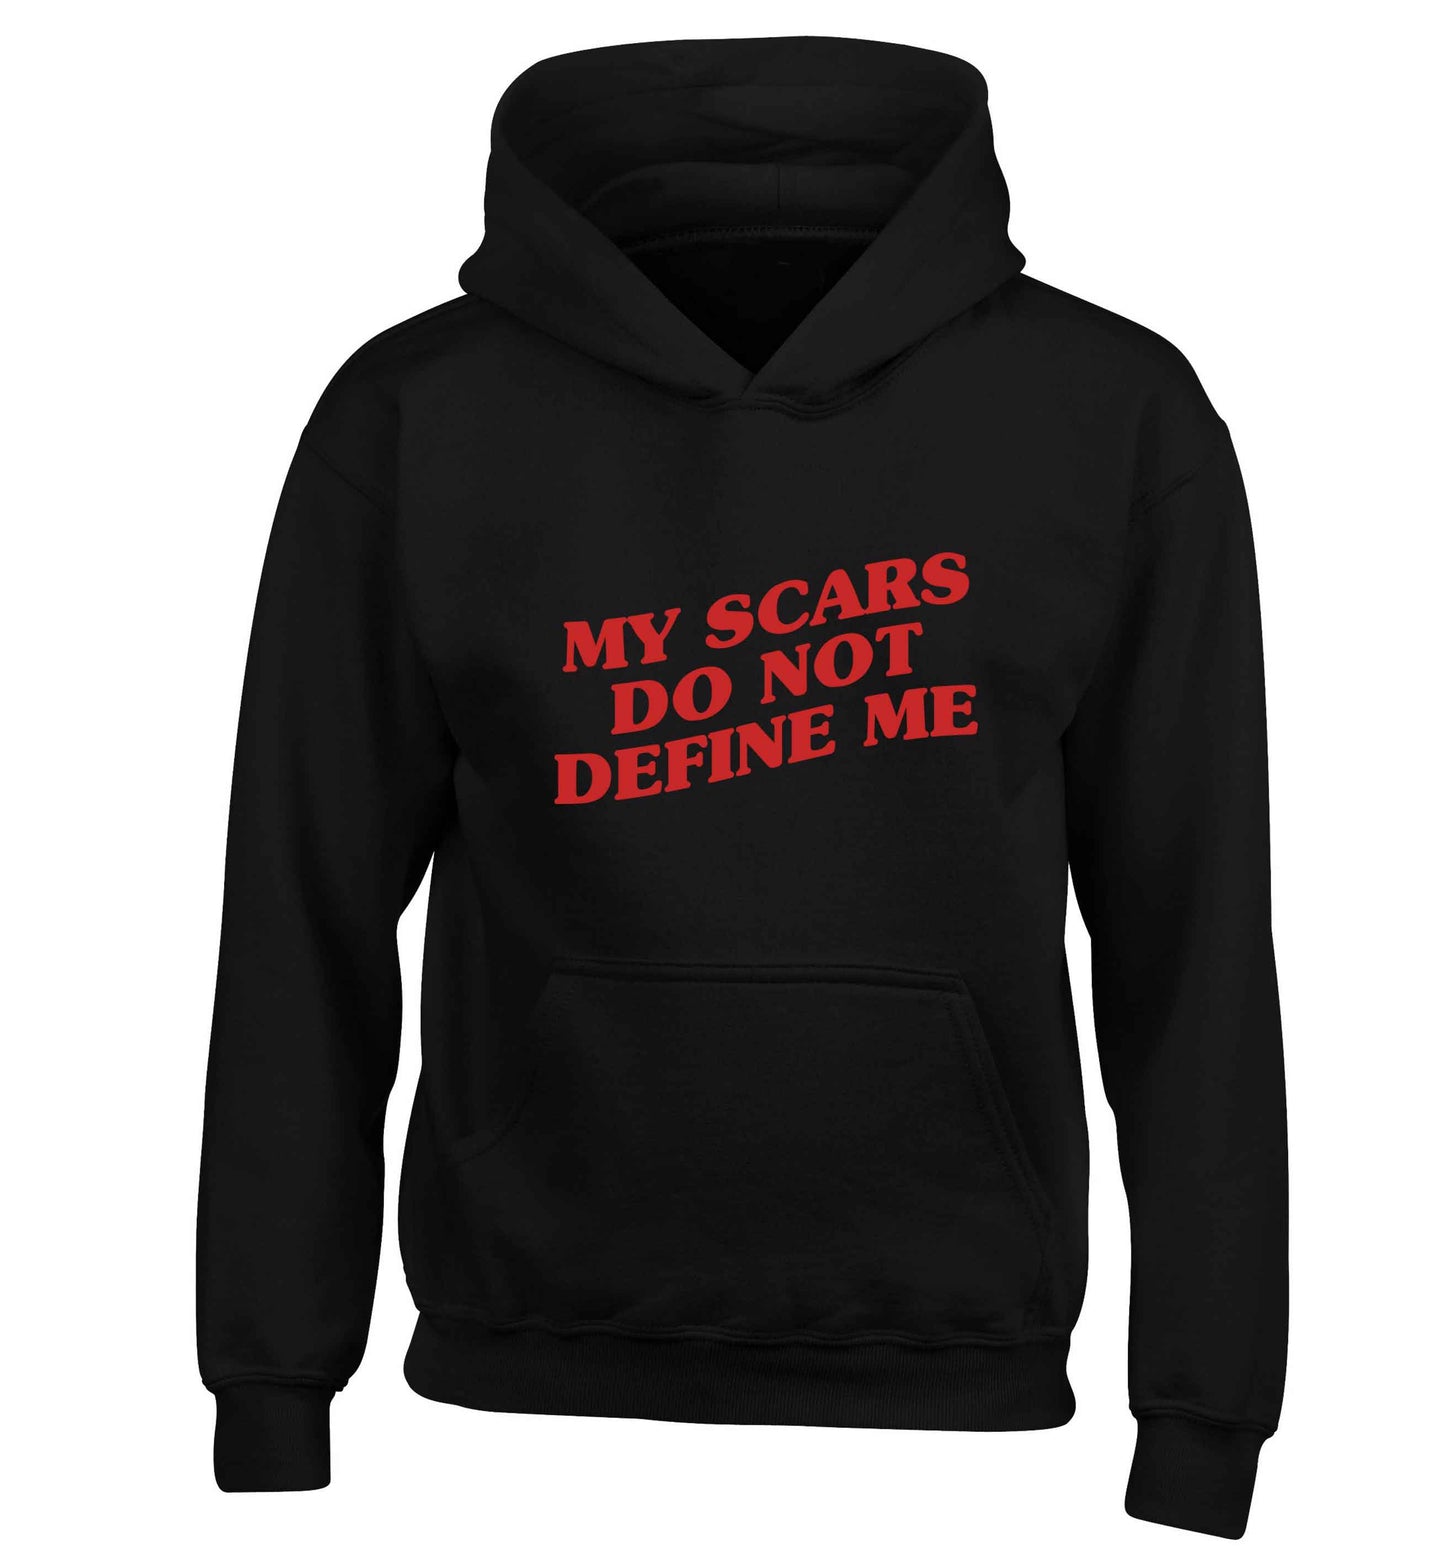 My scars do not define me children's black hoodie 12-13 Years